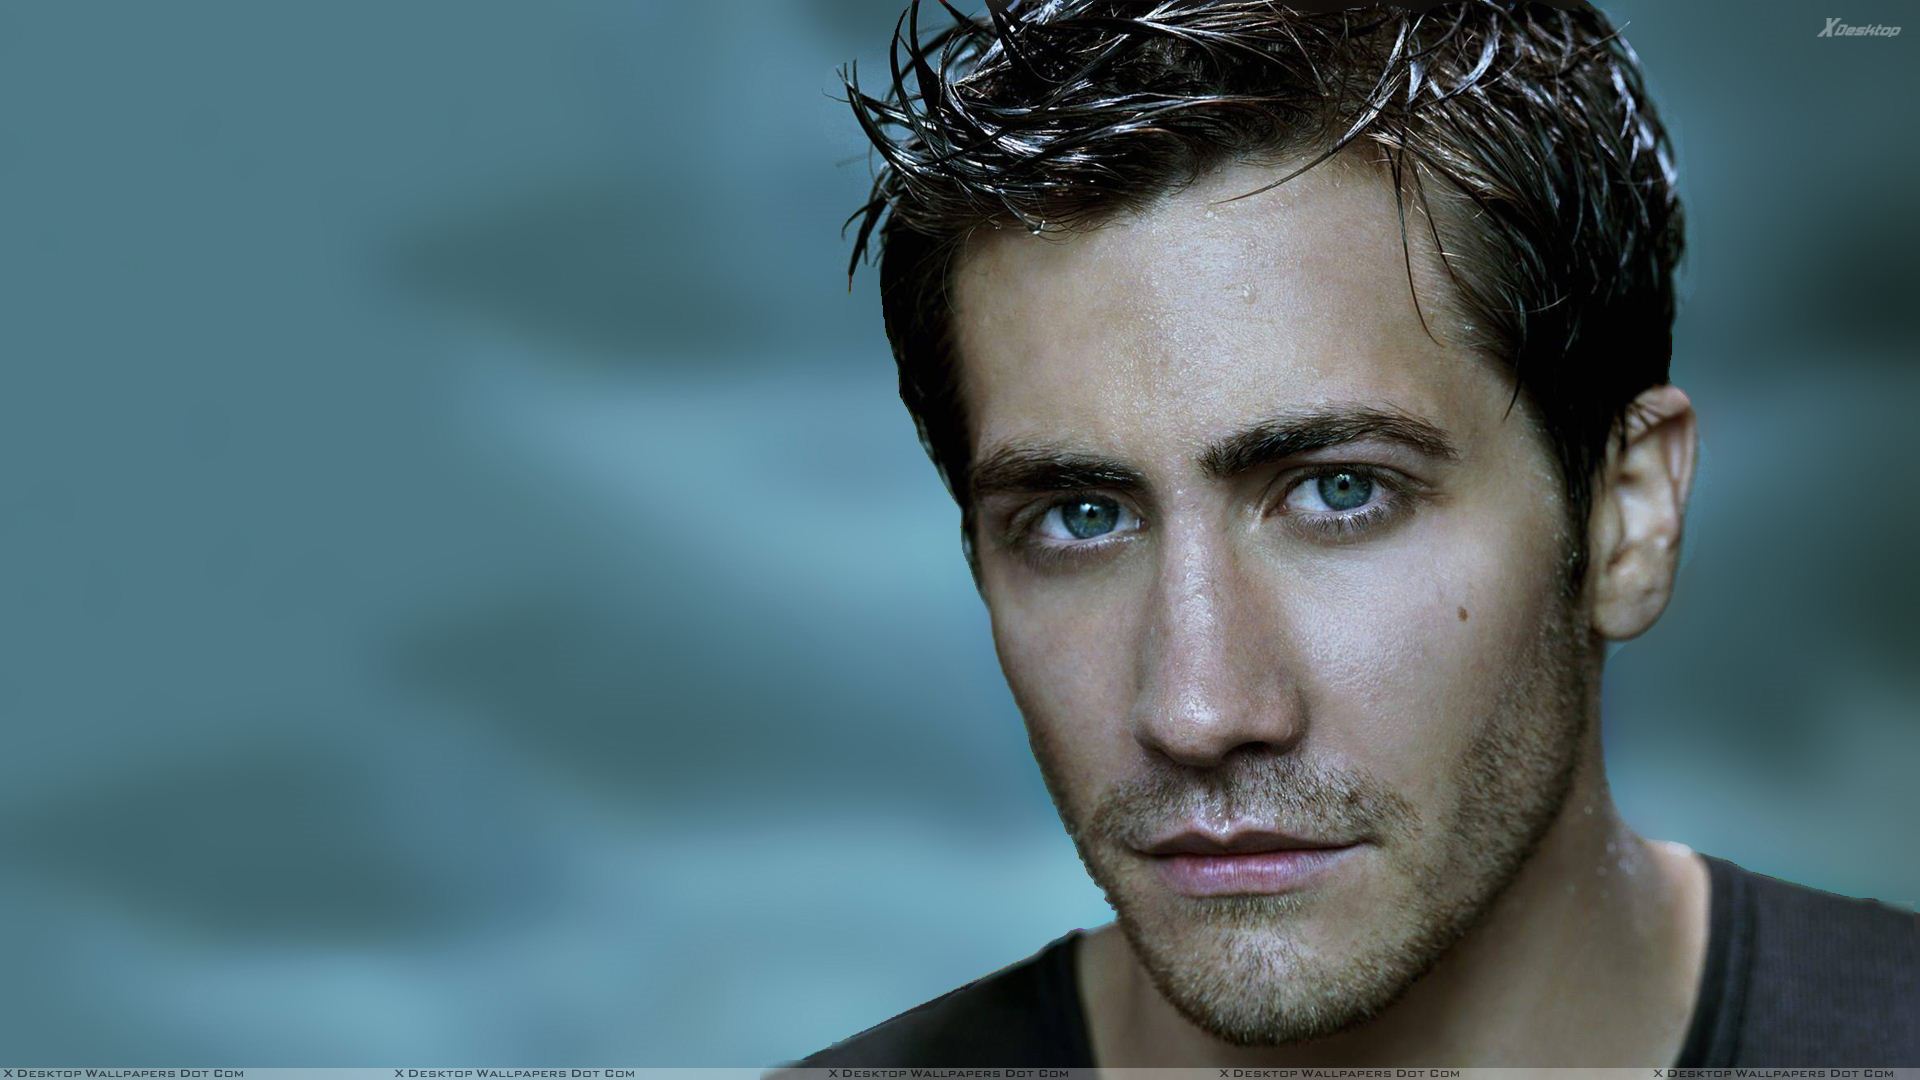 Sweet Face Of Jake Gyllenhaal Wallpaper